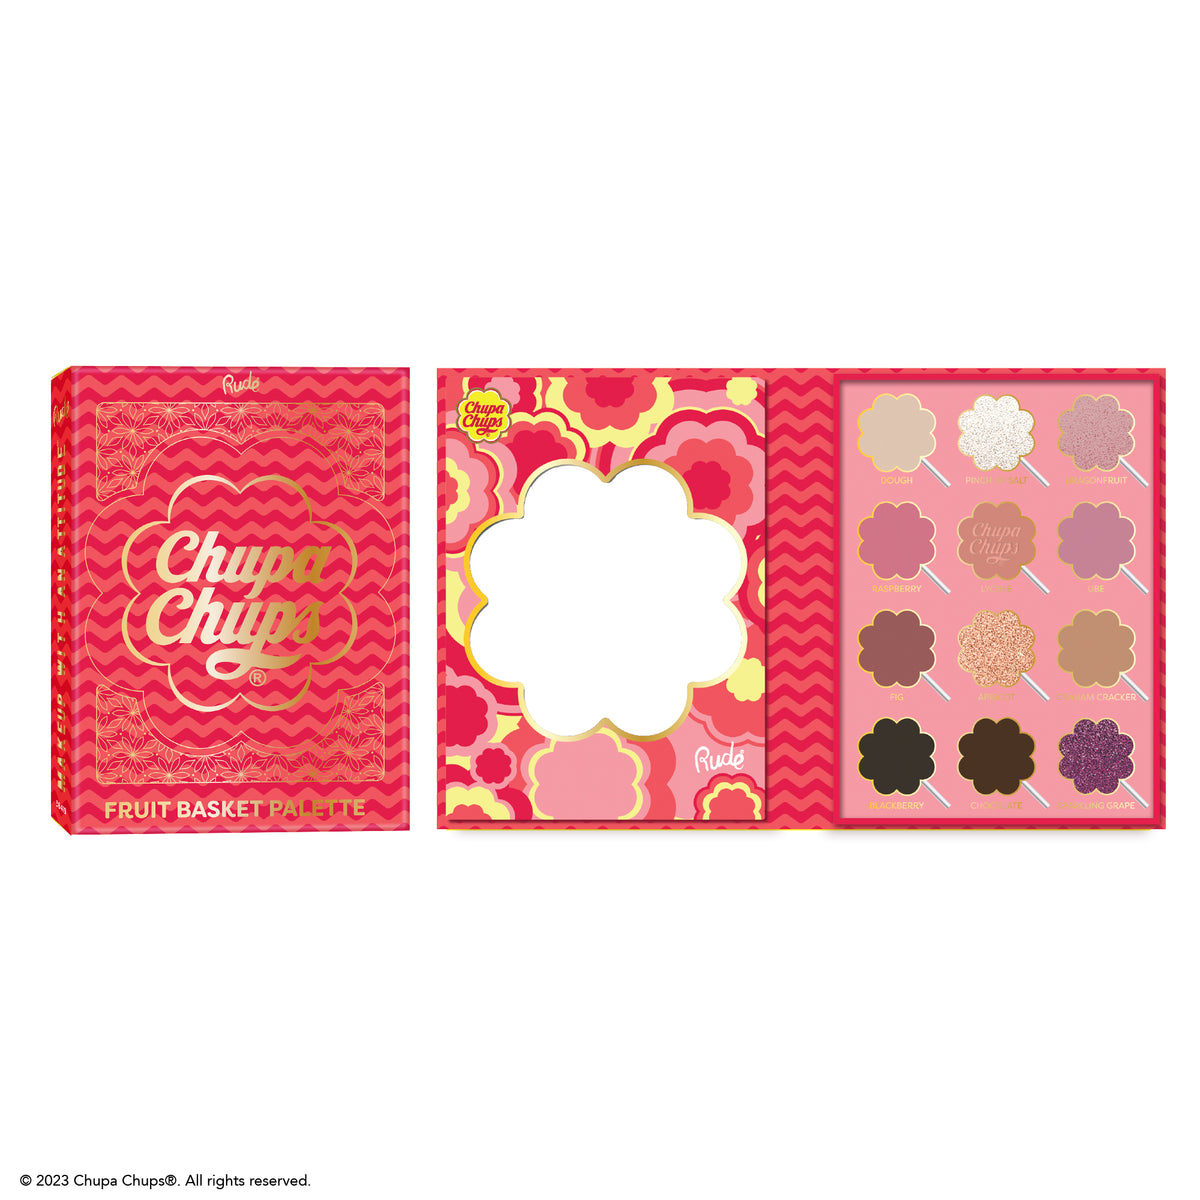 Buy Wholesale China 12color Empty Eyeshadow Makeup Palette Case & Empty  Palette Case at USD 1